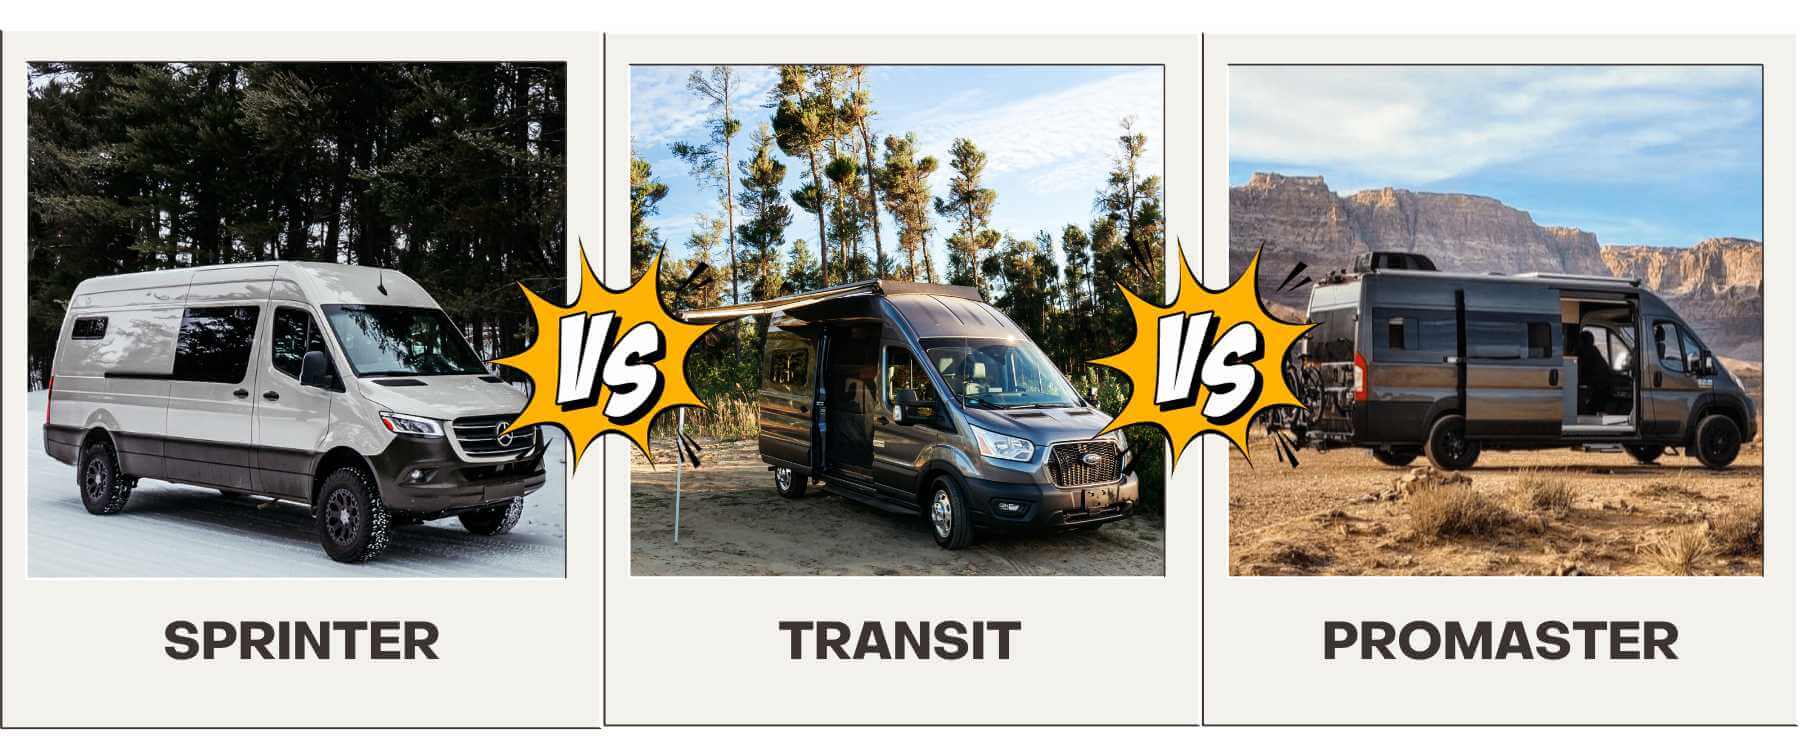 Whats the best van to convert into a campervan?